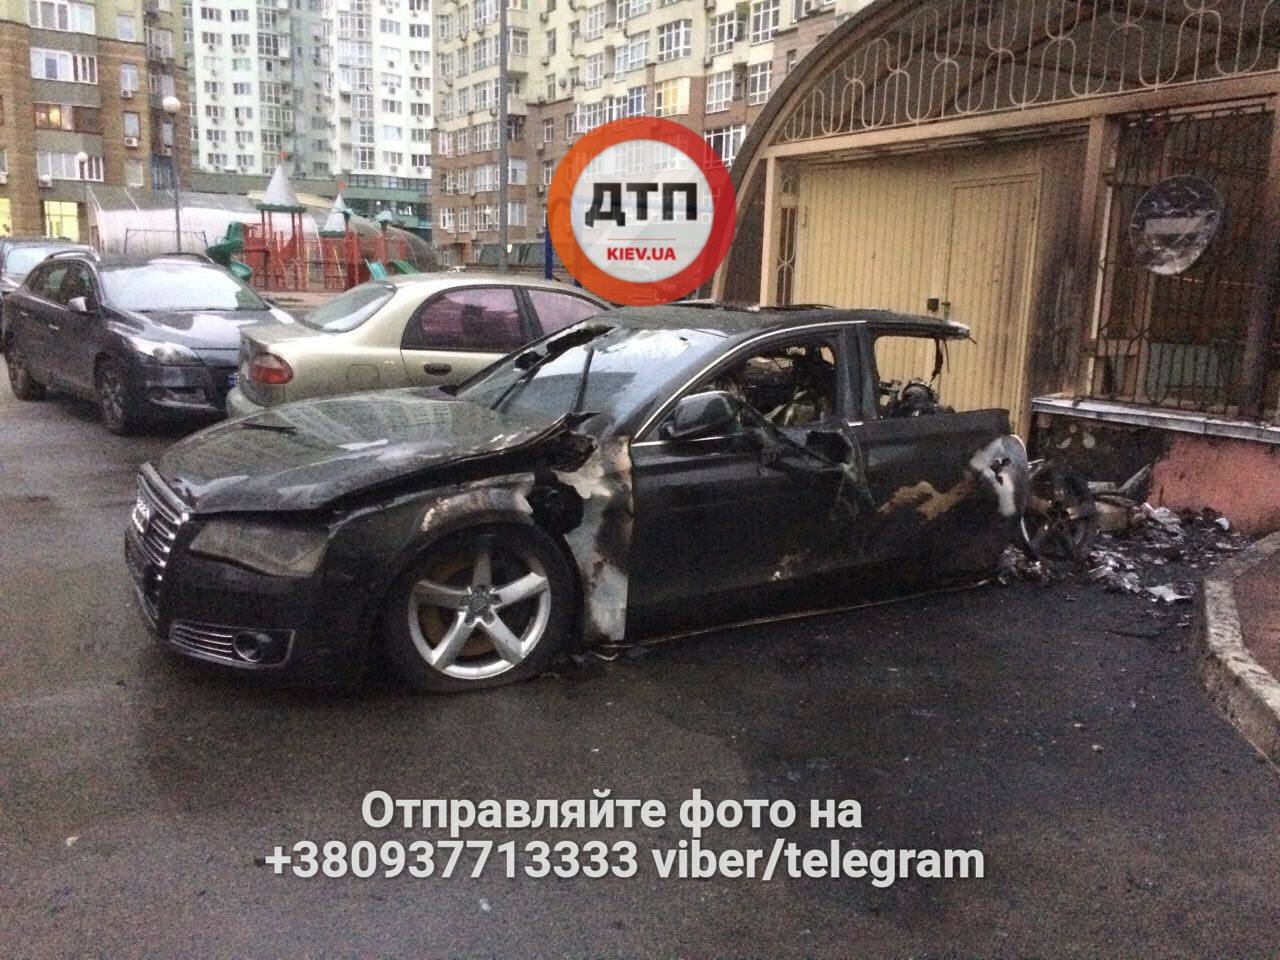 Авто водителя Пивоварского почти полностью уничтожено - фото 1